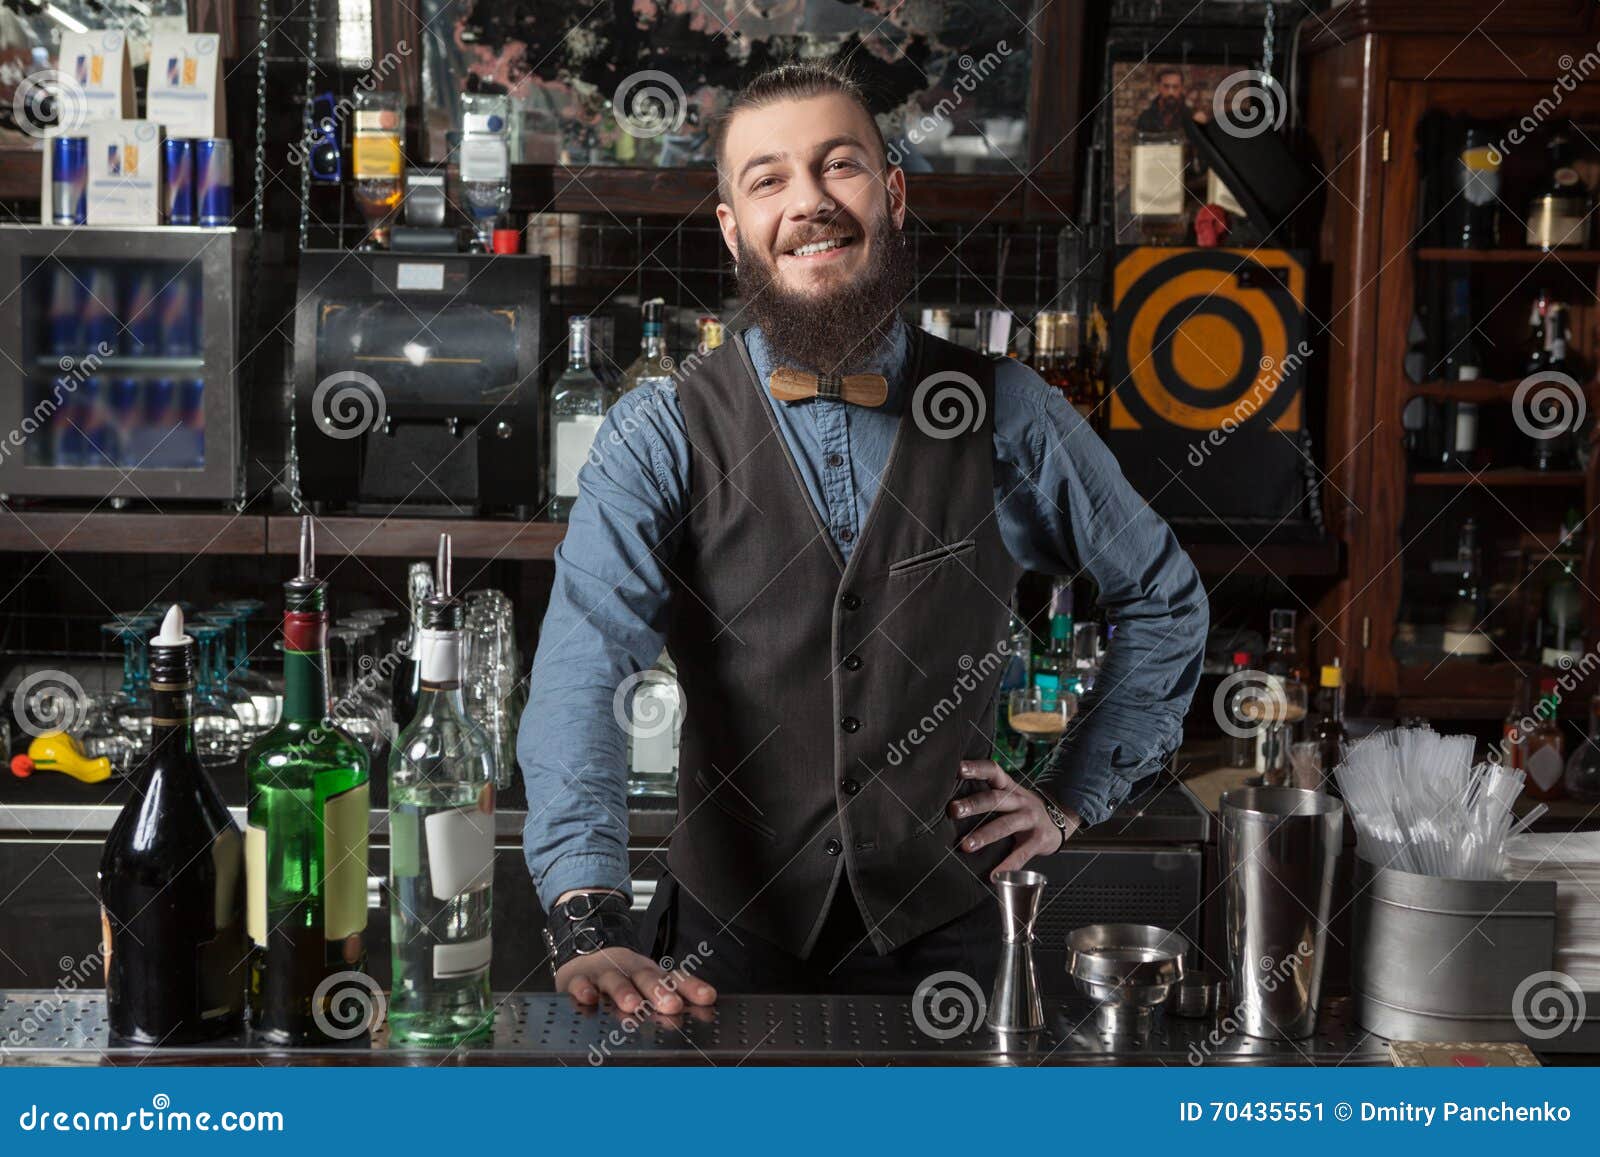 Barman at work. stock image. Image of alcohol, happy - 70435551